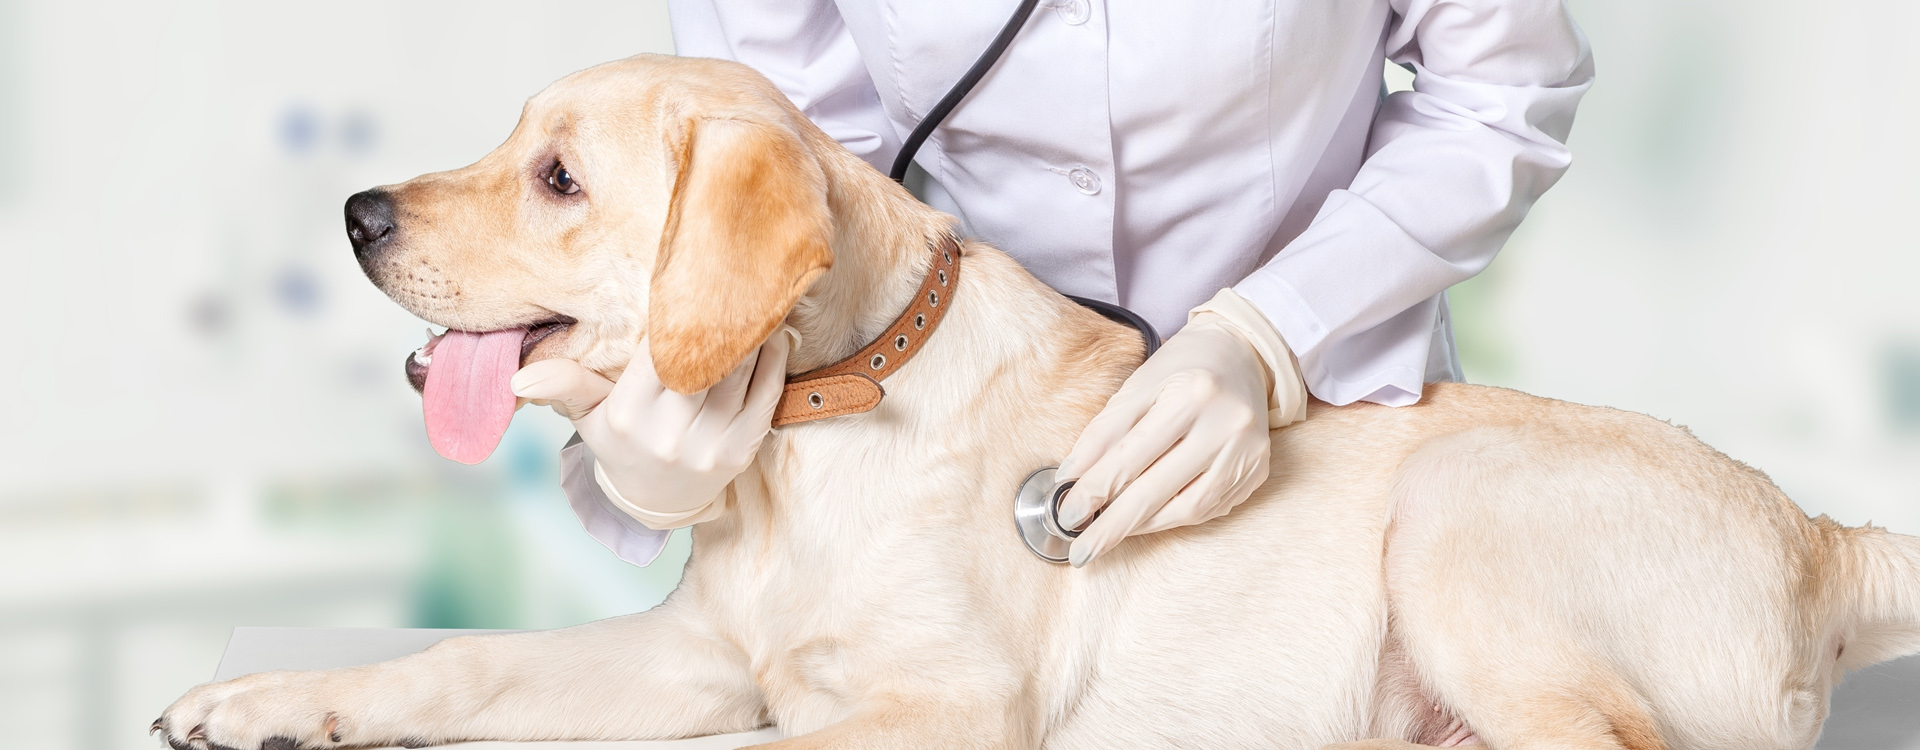 Doctor Examine the Dog